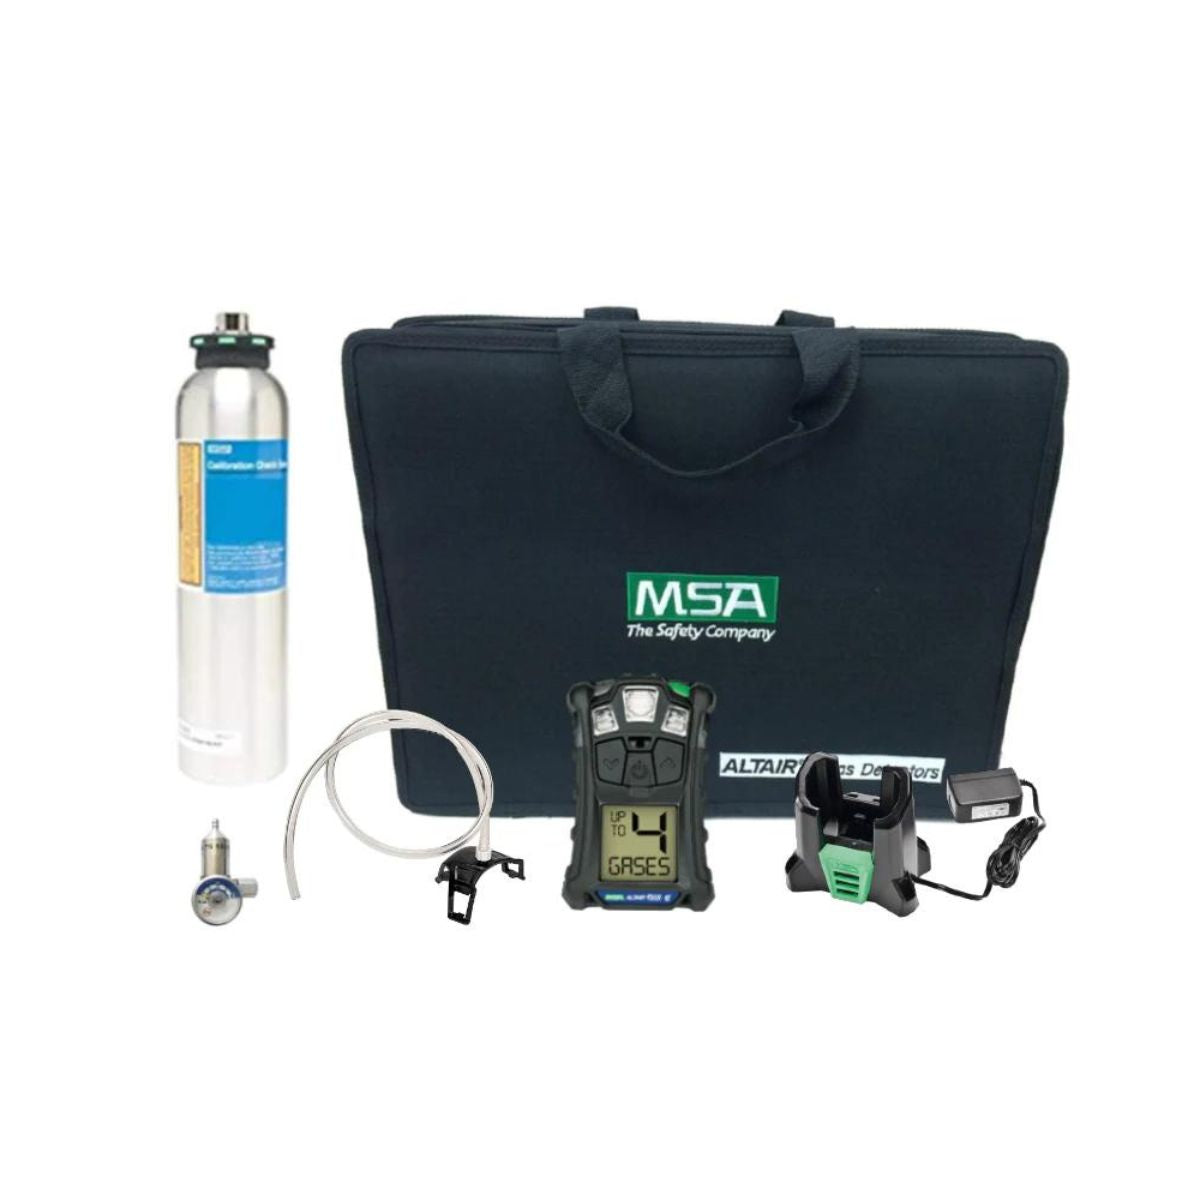 MSA ALTAIR 4XR Multigas Detector Kit in Carry Case, LEL, O2, CO, H2S 10178585K